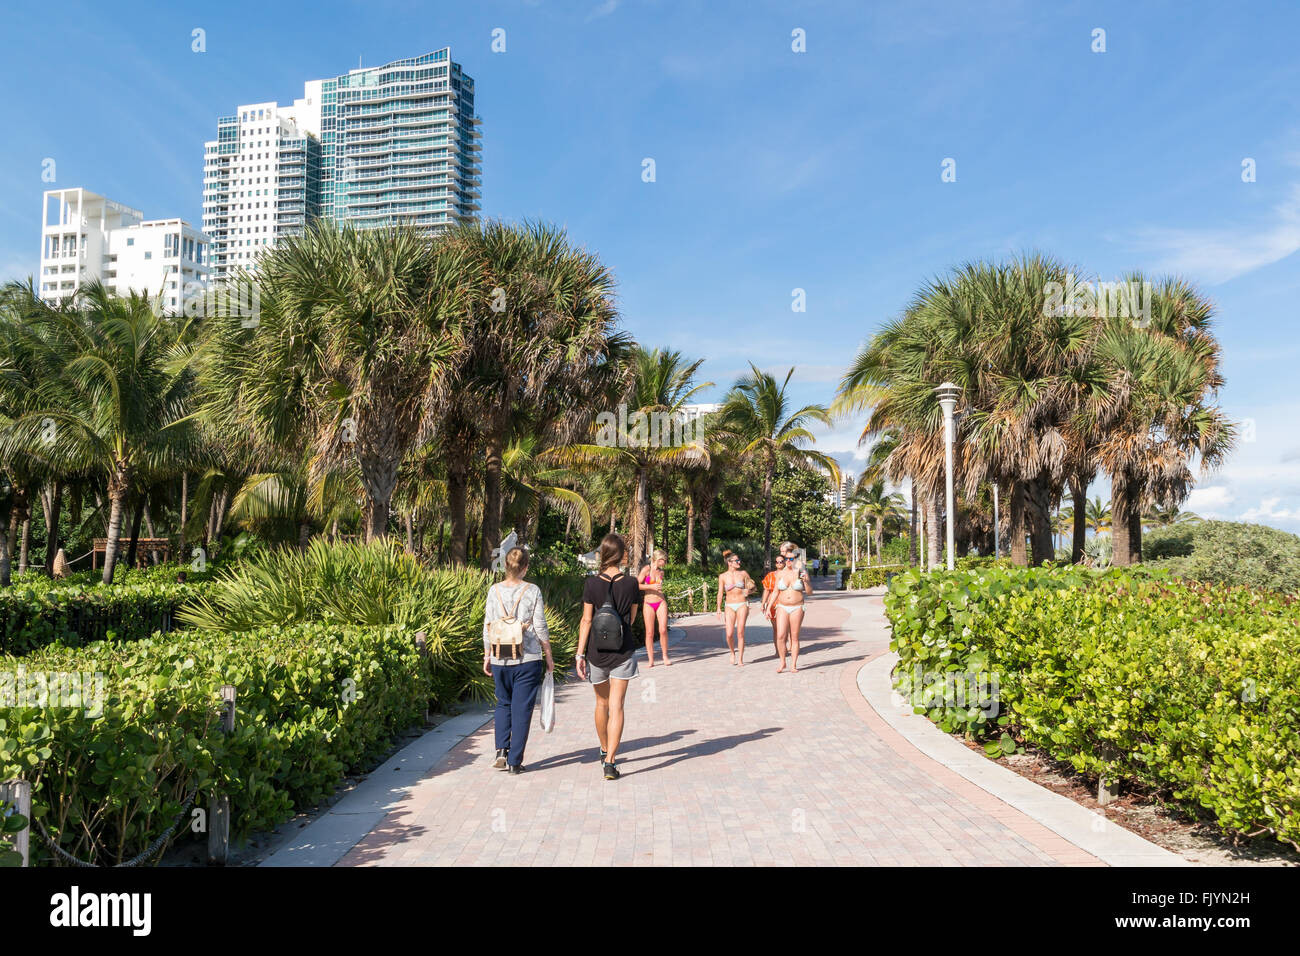 People walking on South Beach Boardwalk in Miami Beach, Florida, USA Stock Photo